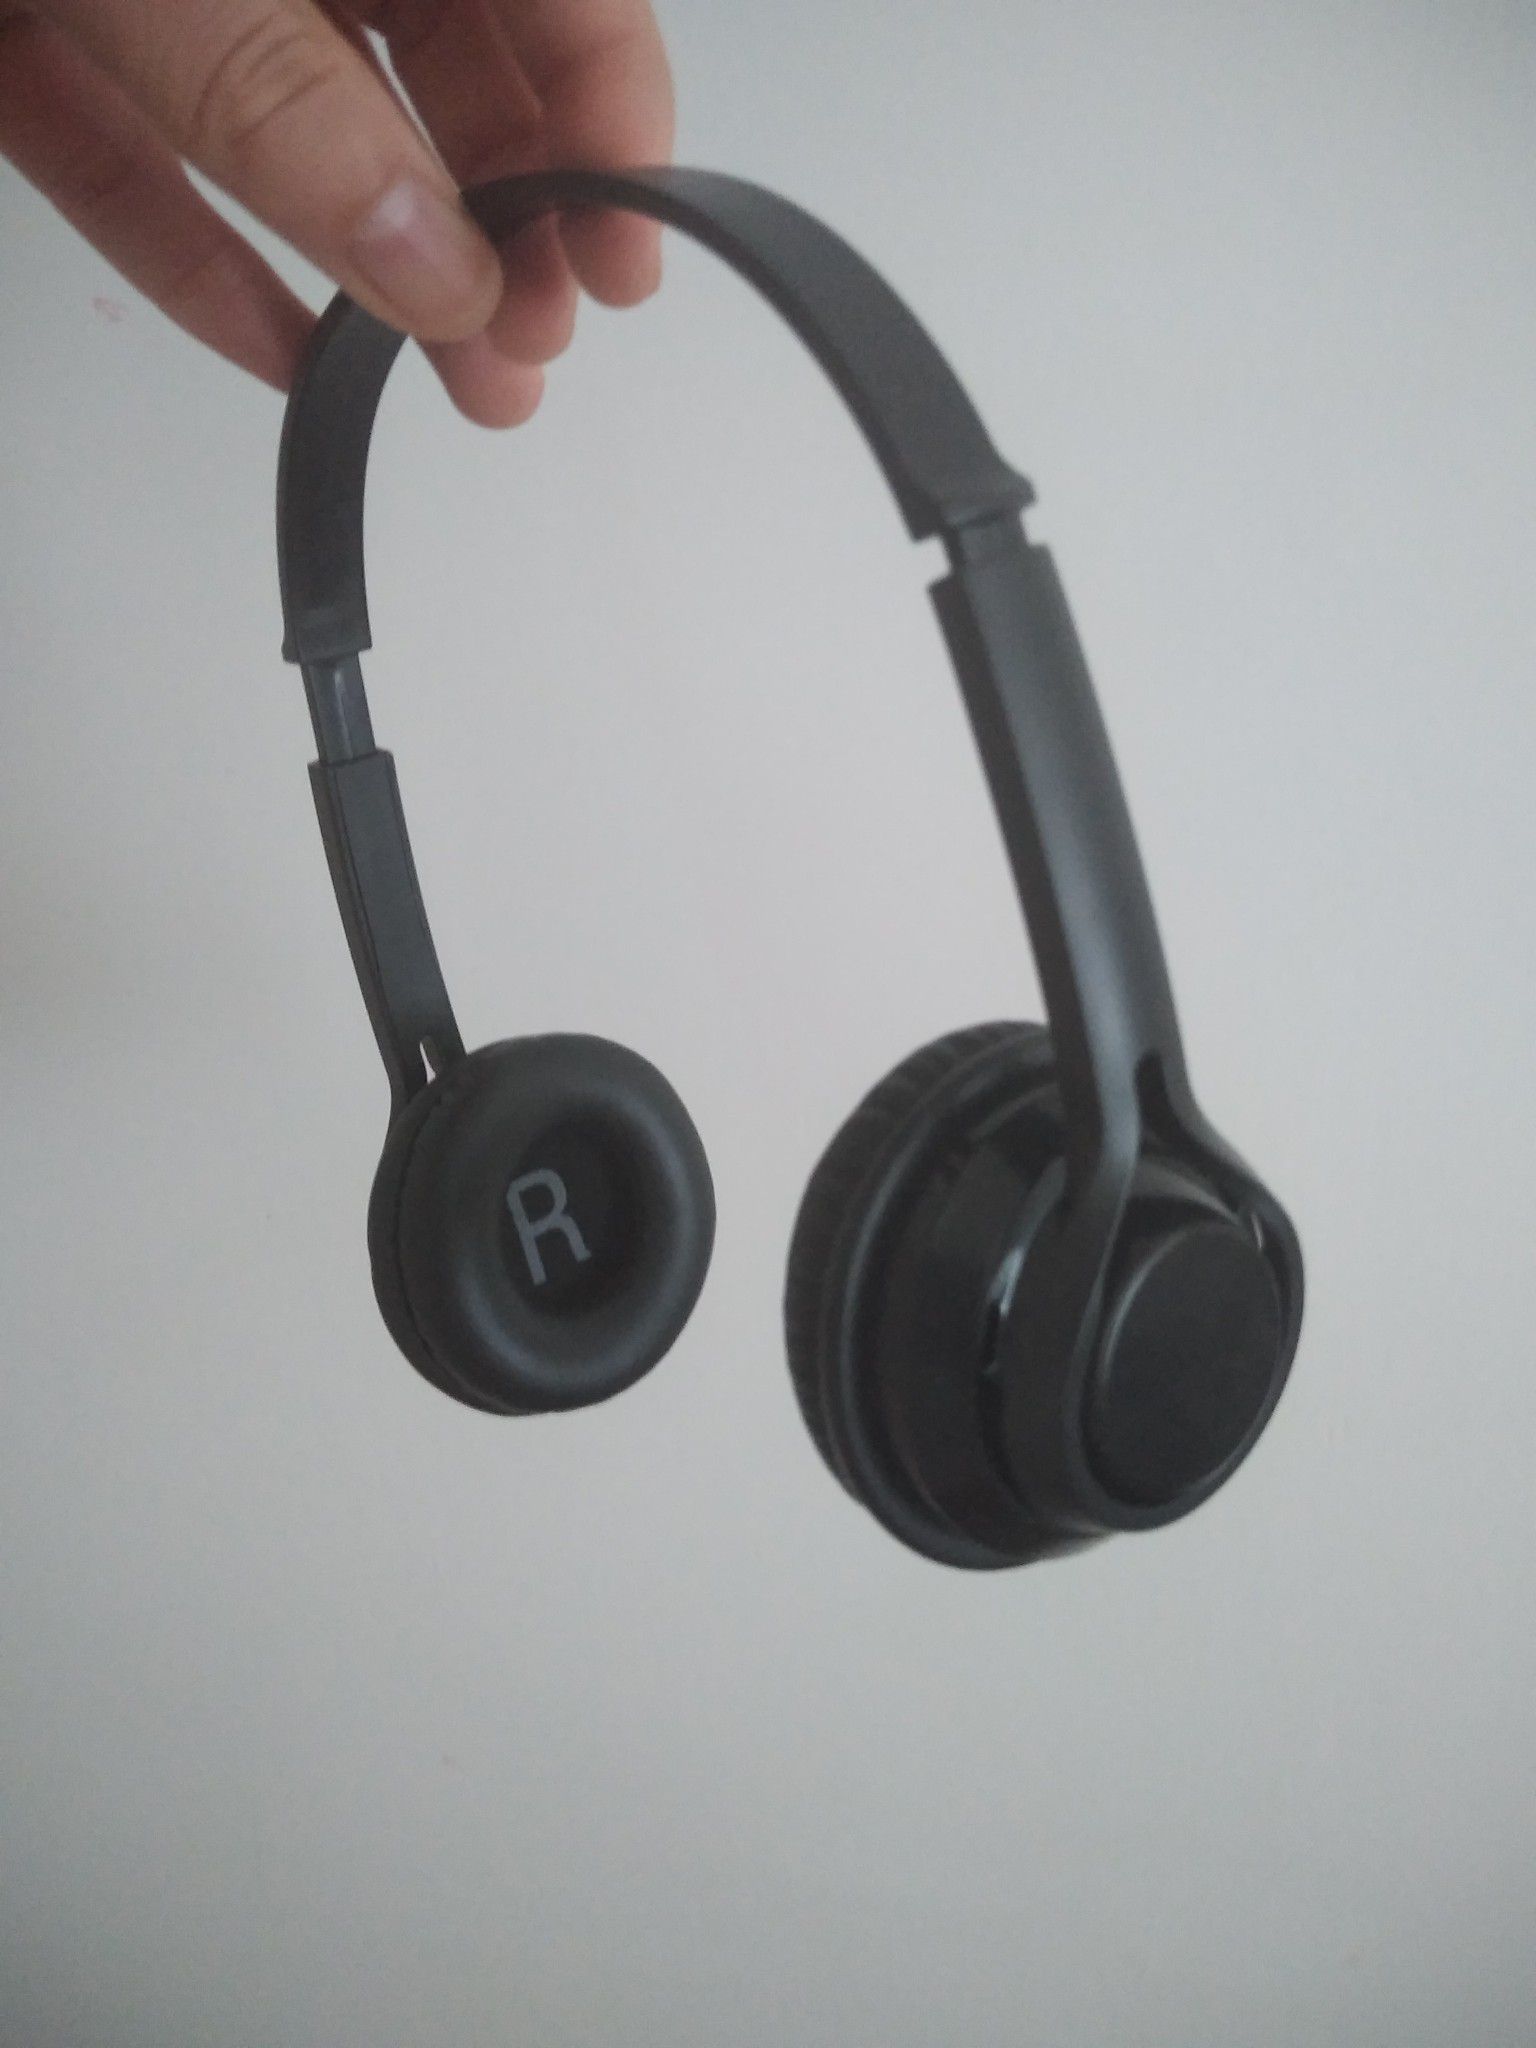 Bluetooth Wireless Headphones